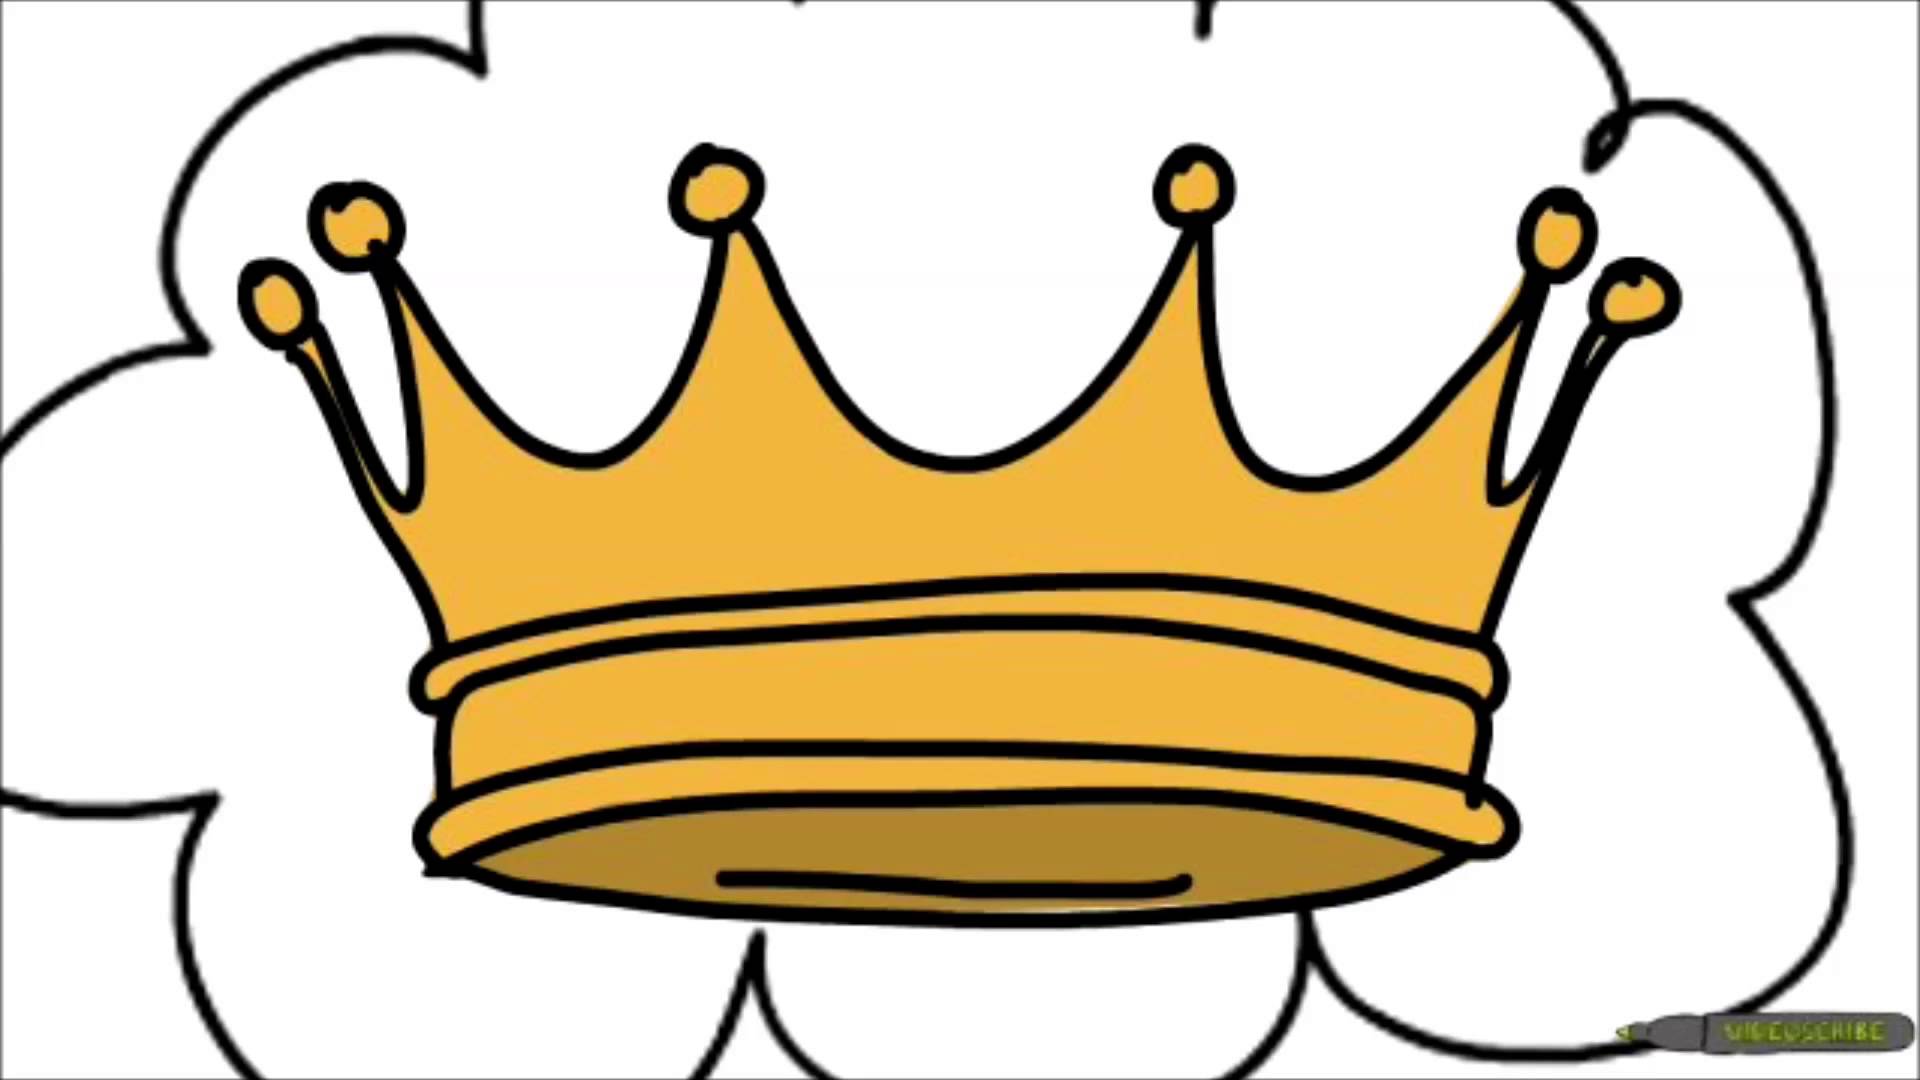 Free Crown Drawing, Download Free Crown Drawing png images, Free